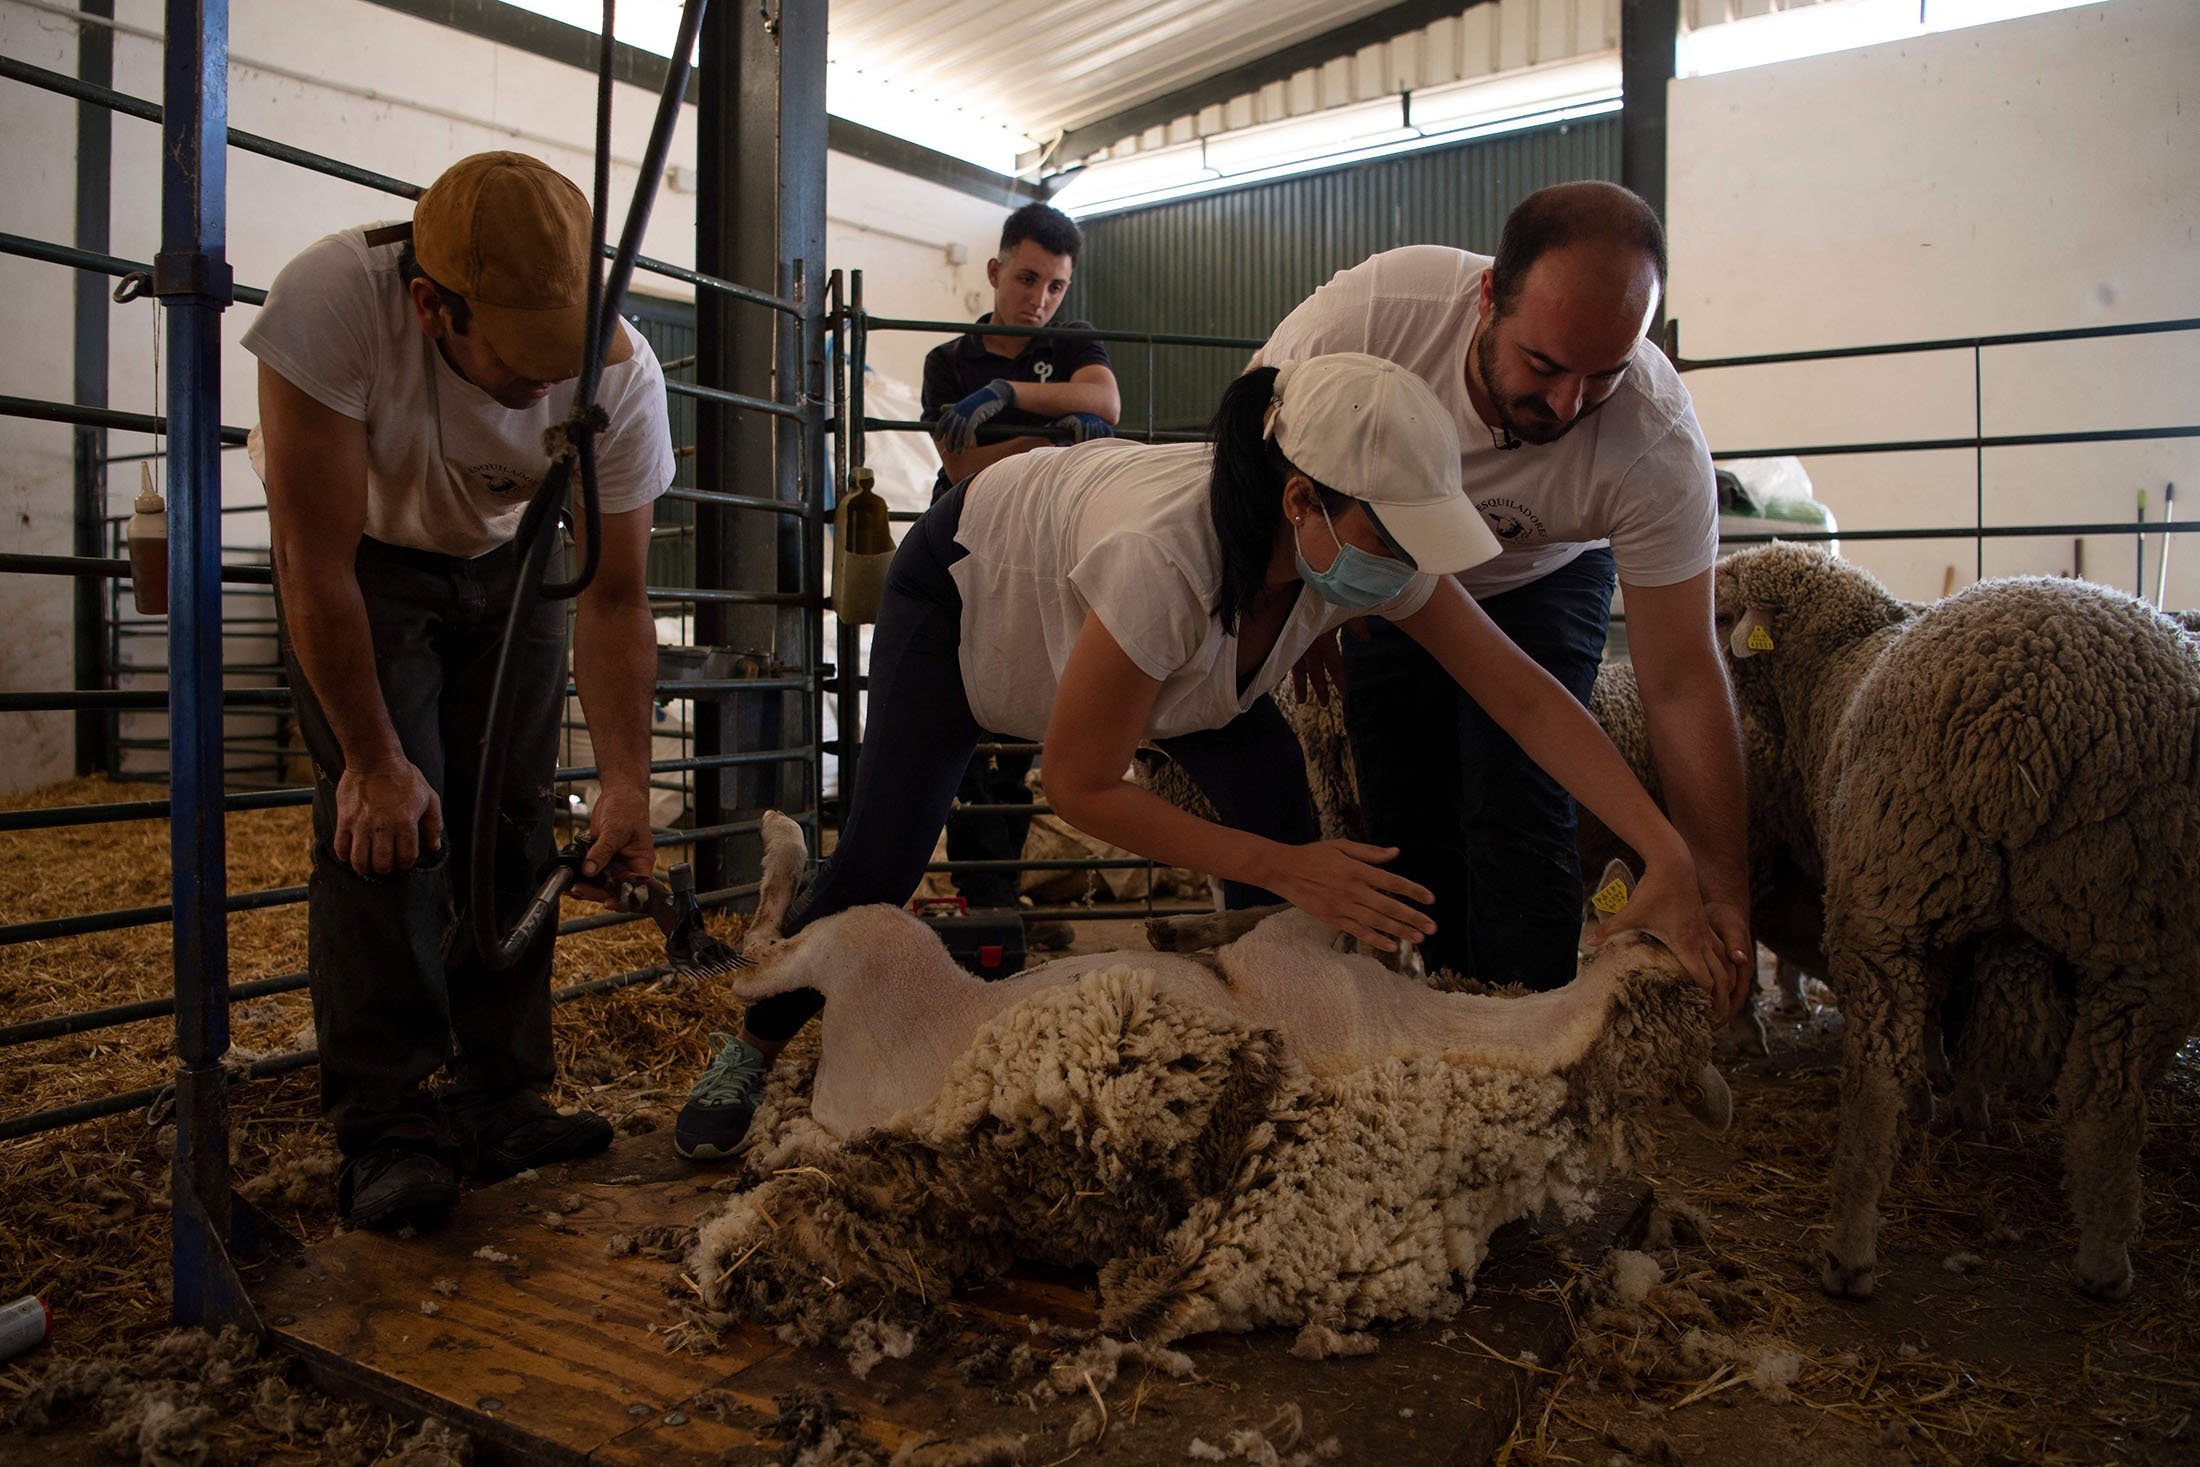 Professional shearer Jose Rivero (R) teaches a student to shear a sheep at the Cooprado farm's shepherding school in Casar de Caceres, Spain, May 13, 2022. (AFP Photo)